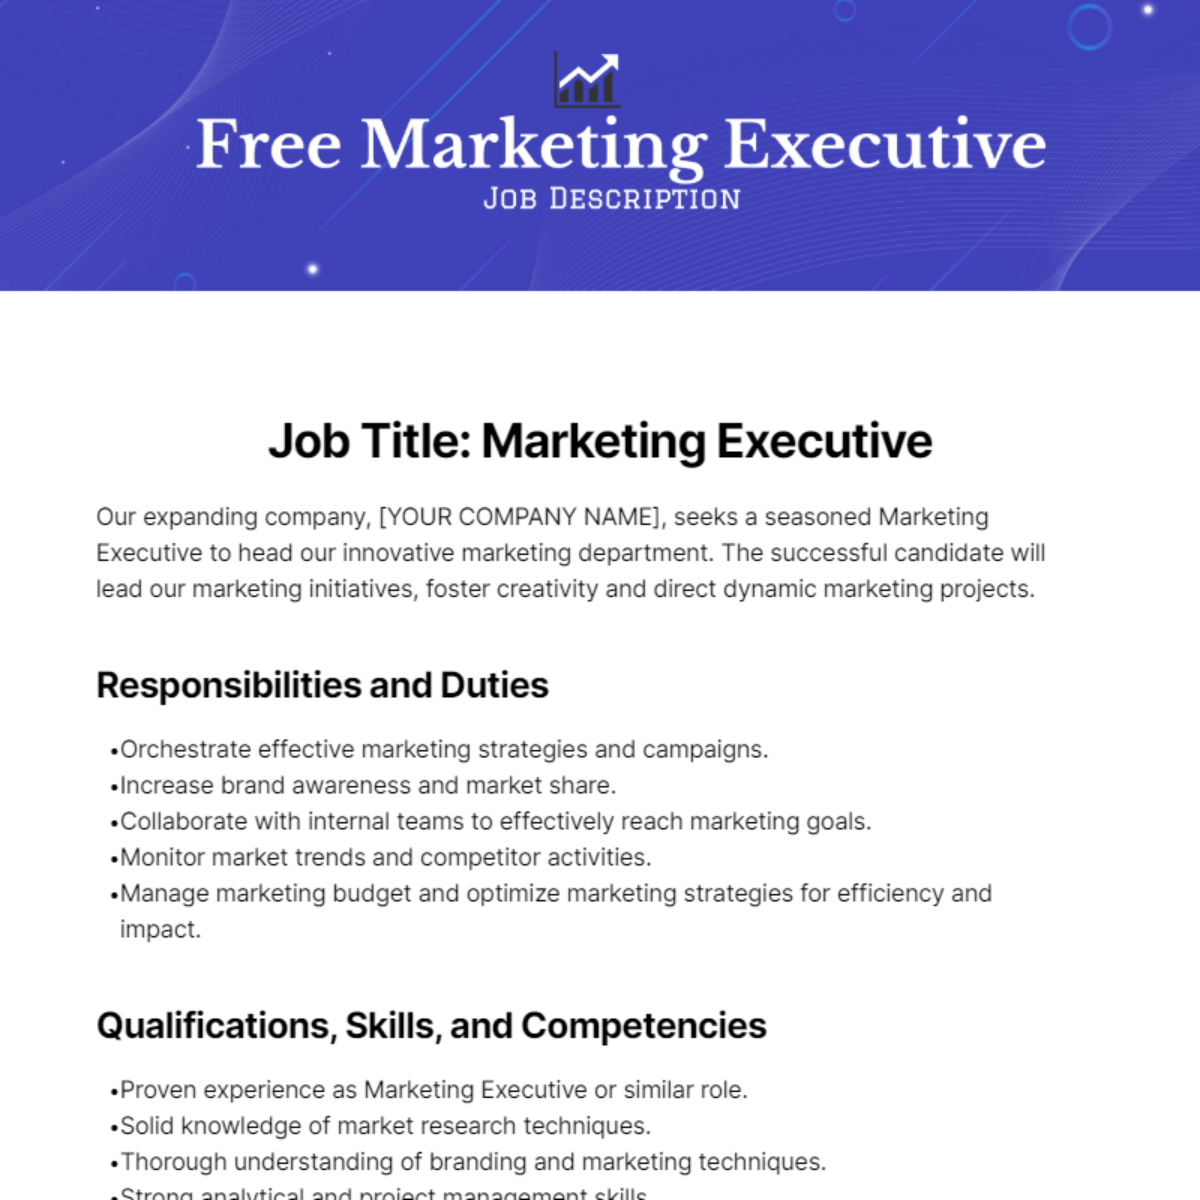 Free Marketing Executive Job Description Template